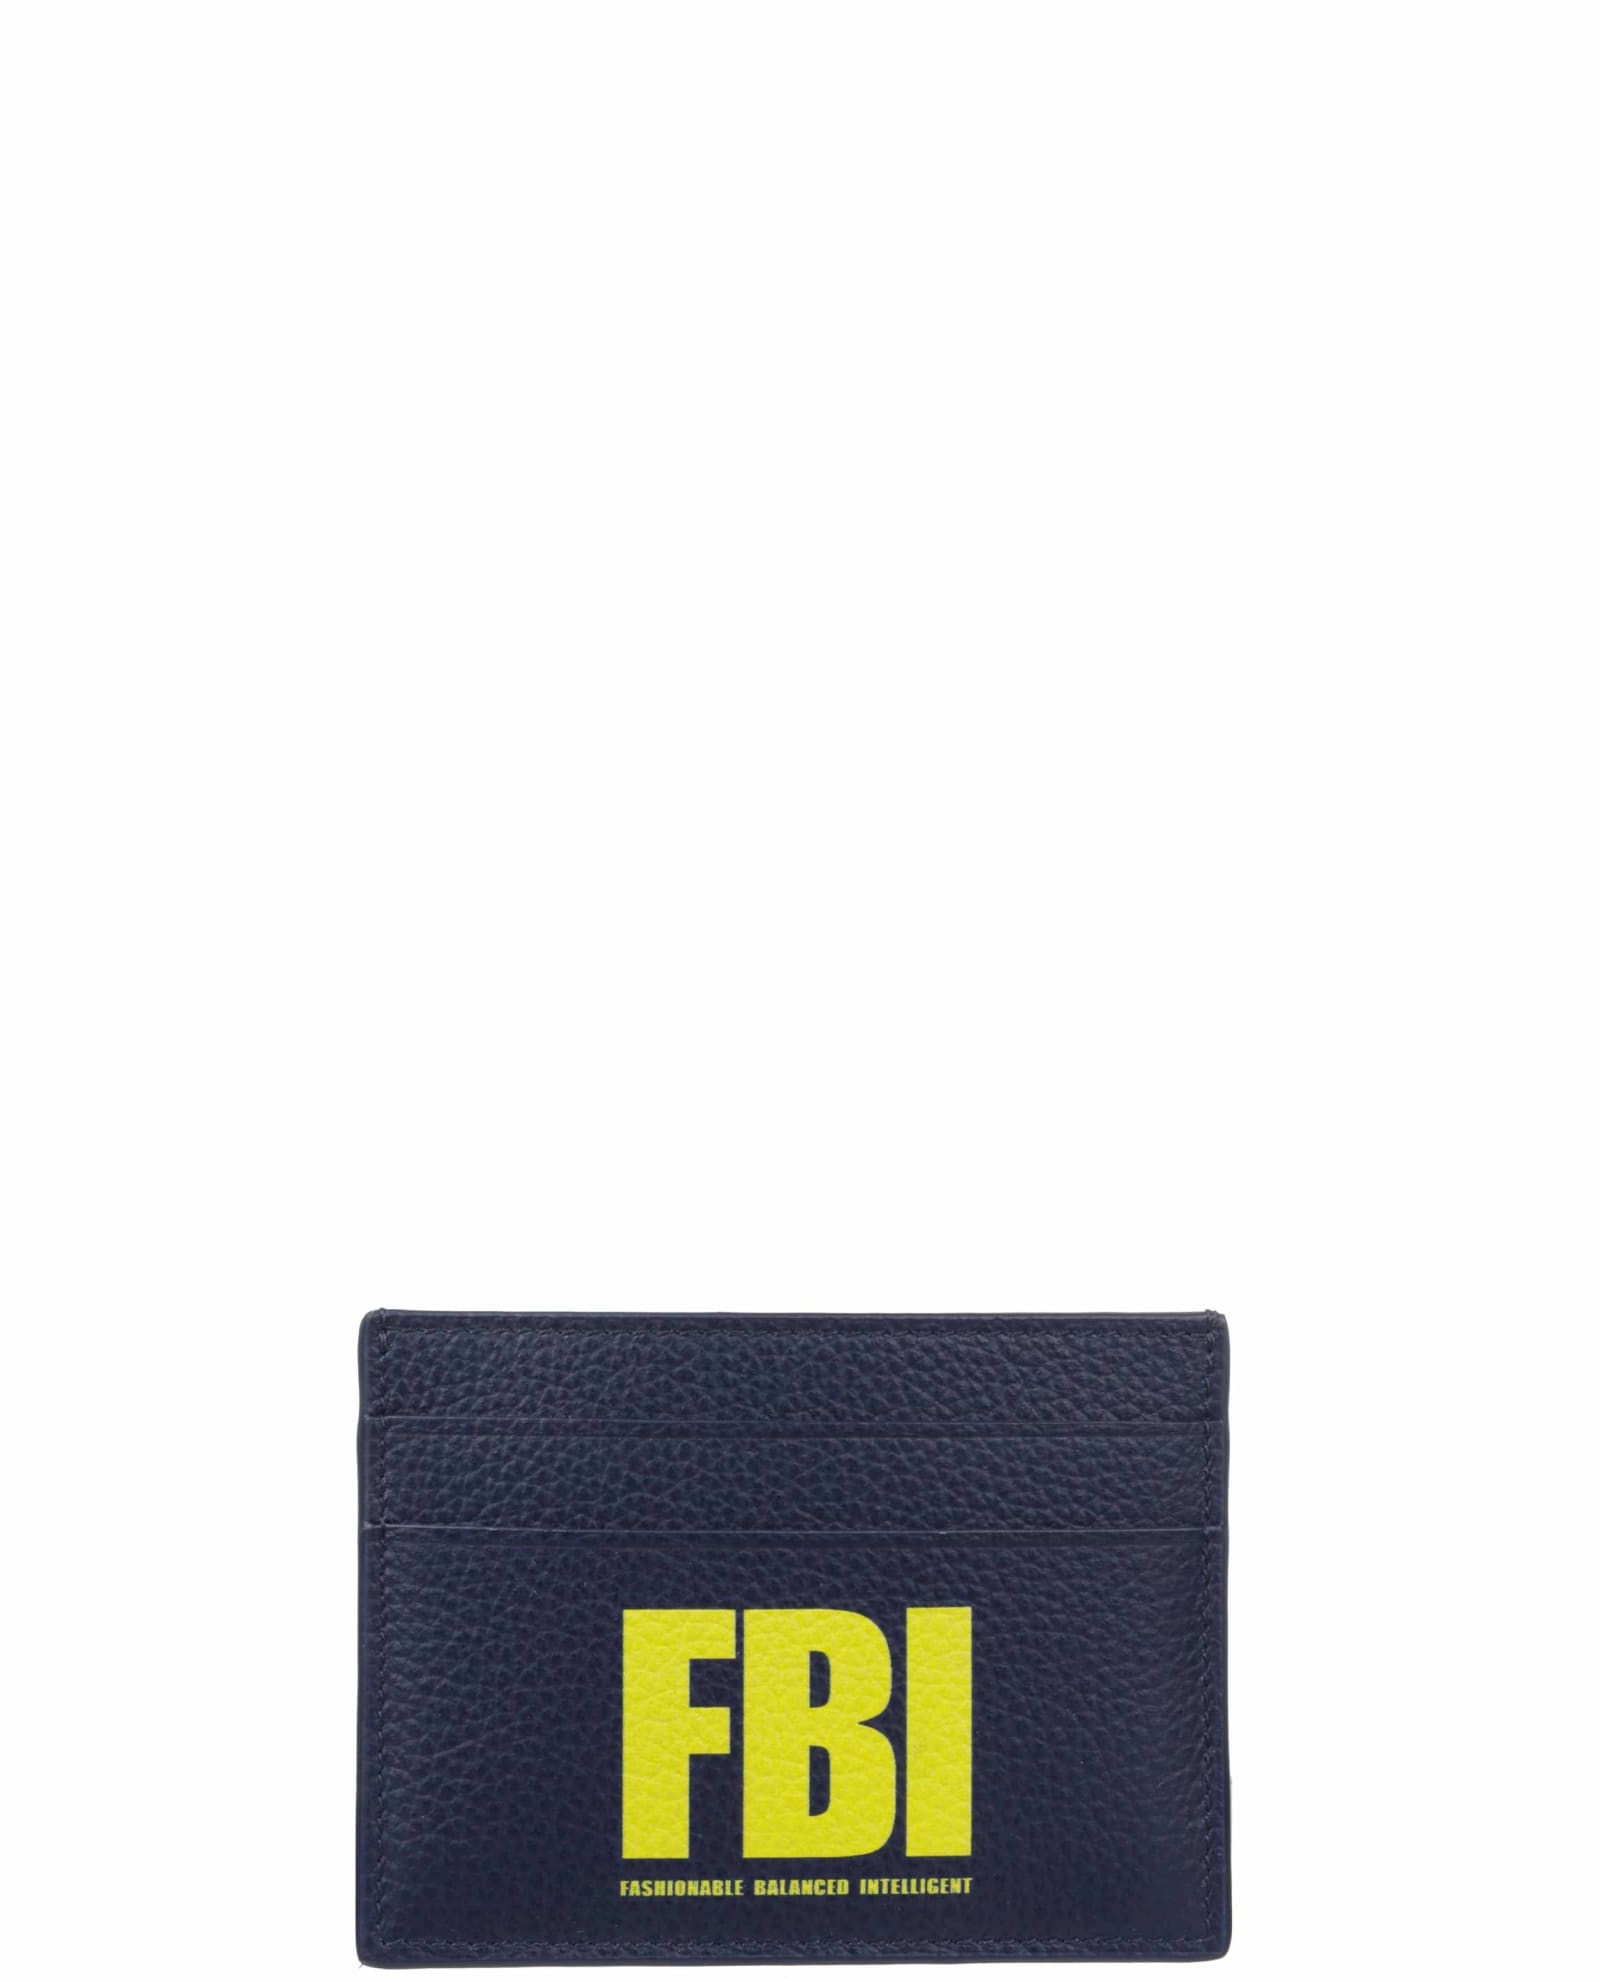 Balenciaga Navy Fbi Card Holder